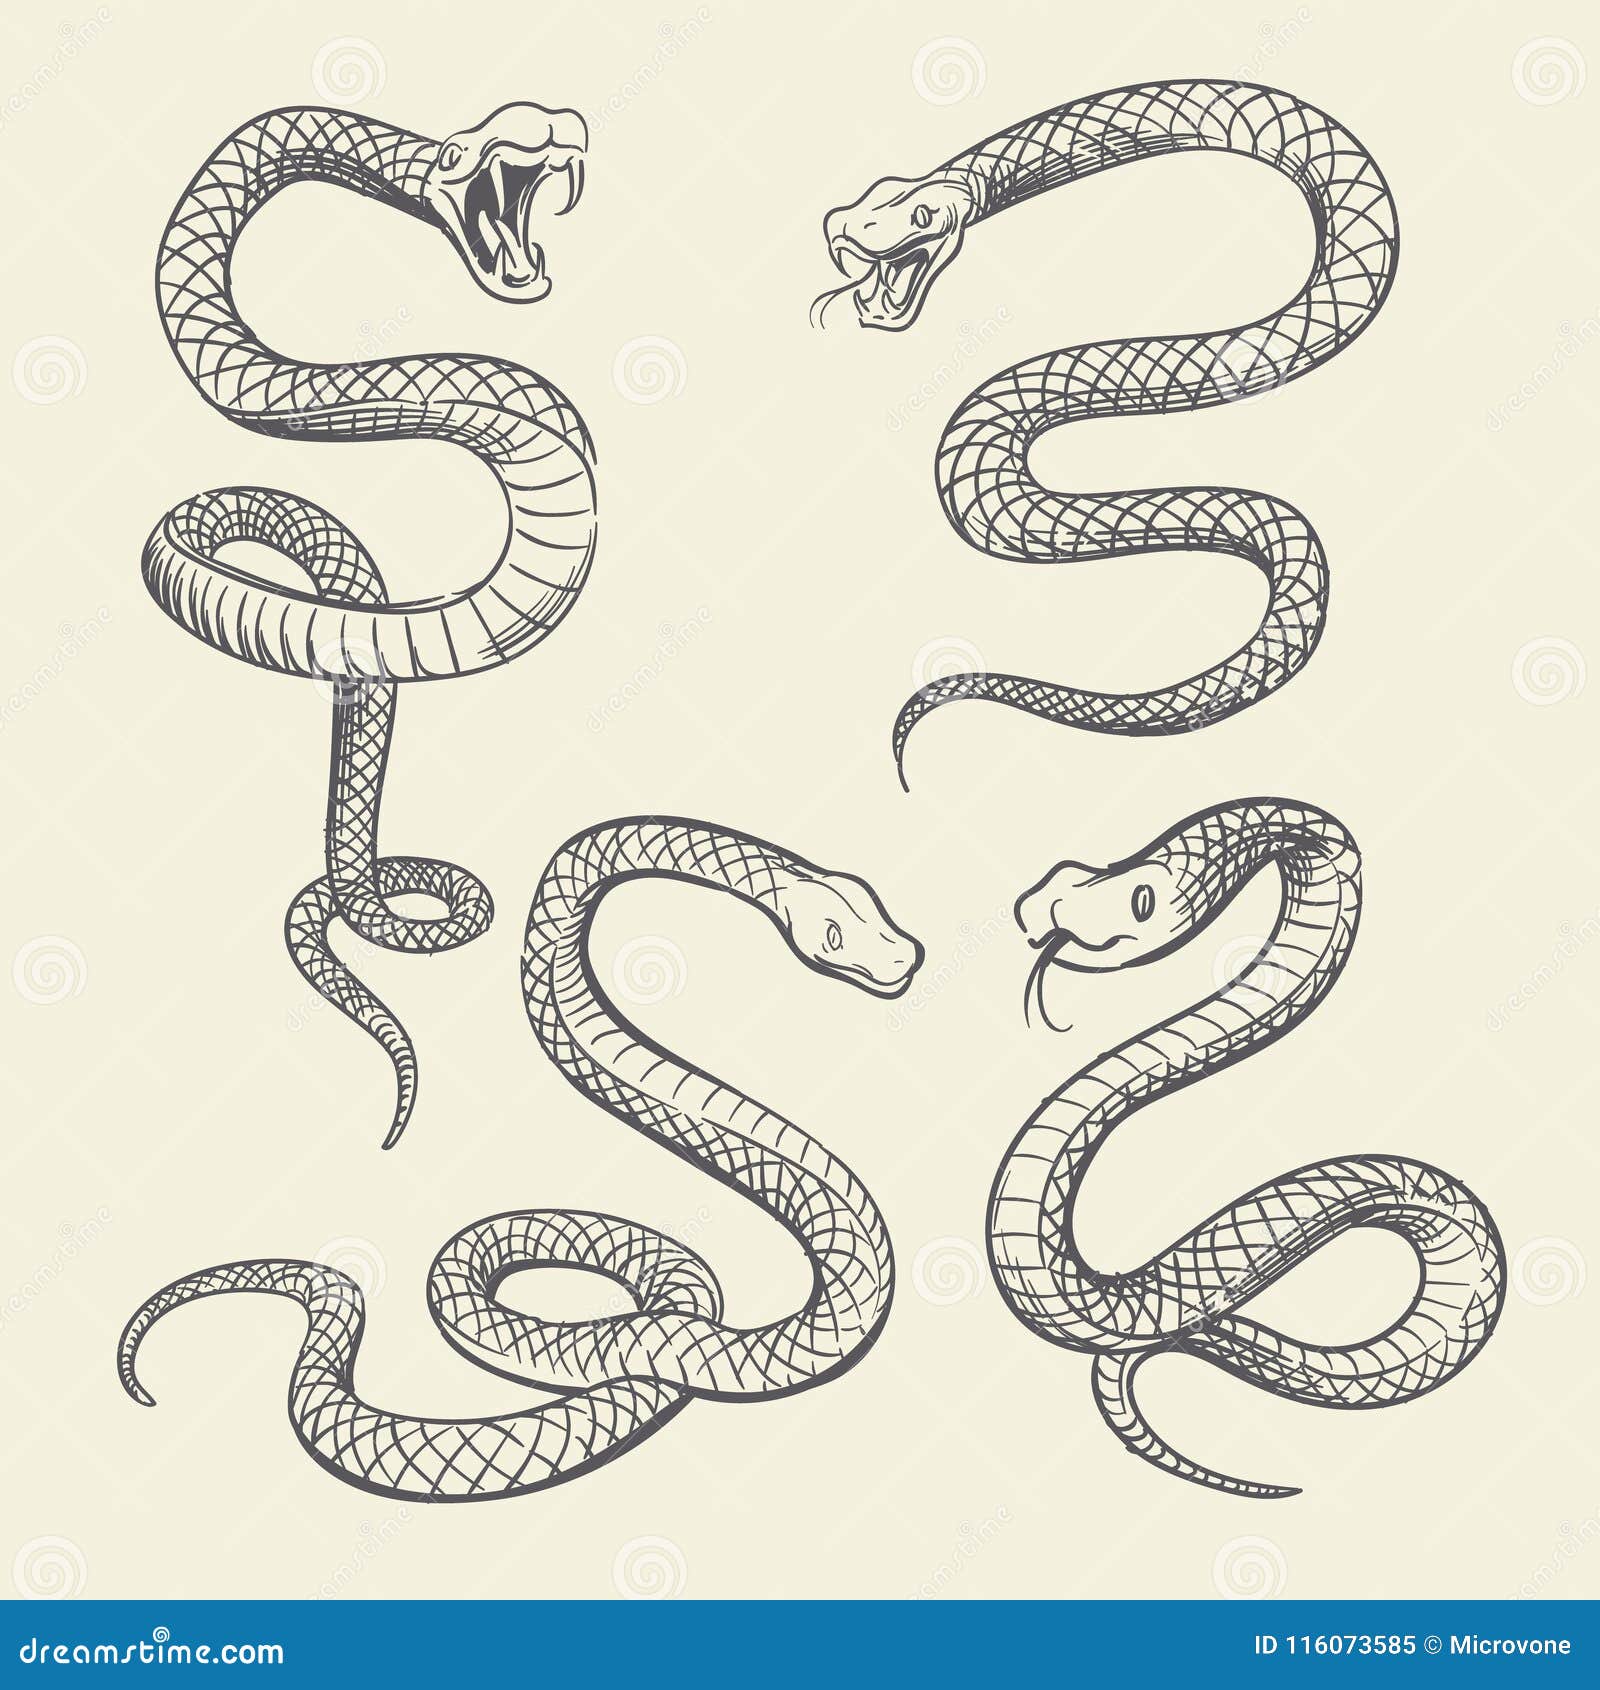 Share 80 snake tattoo drawing latest  thtantai2